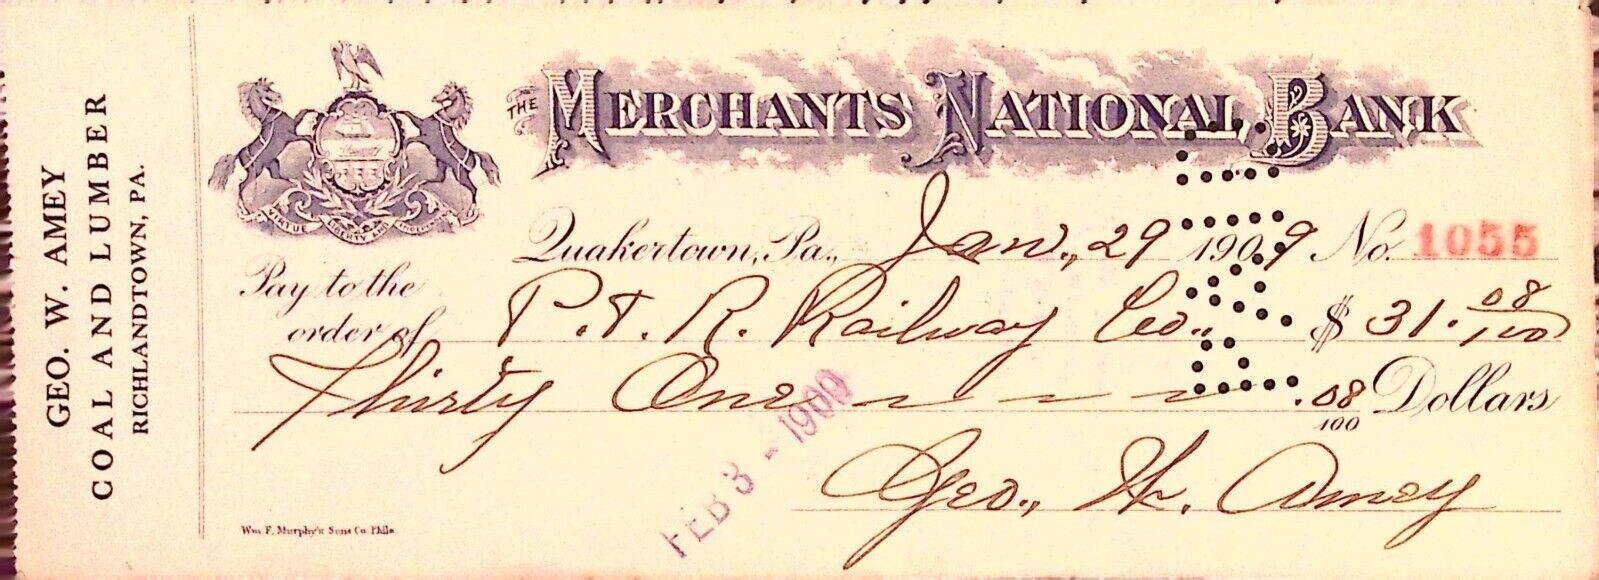 The Merchants National Bank Quakertown PA to P&R Railway Co Bank Check